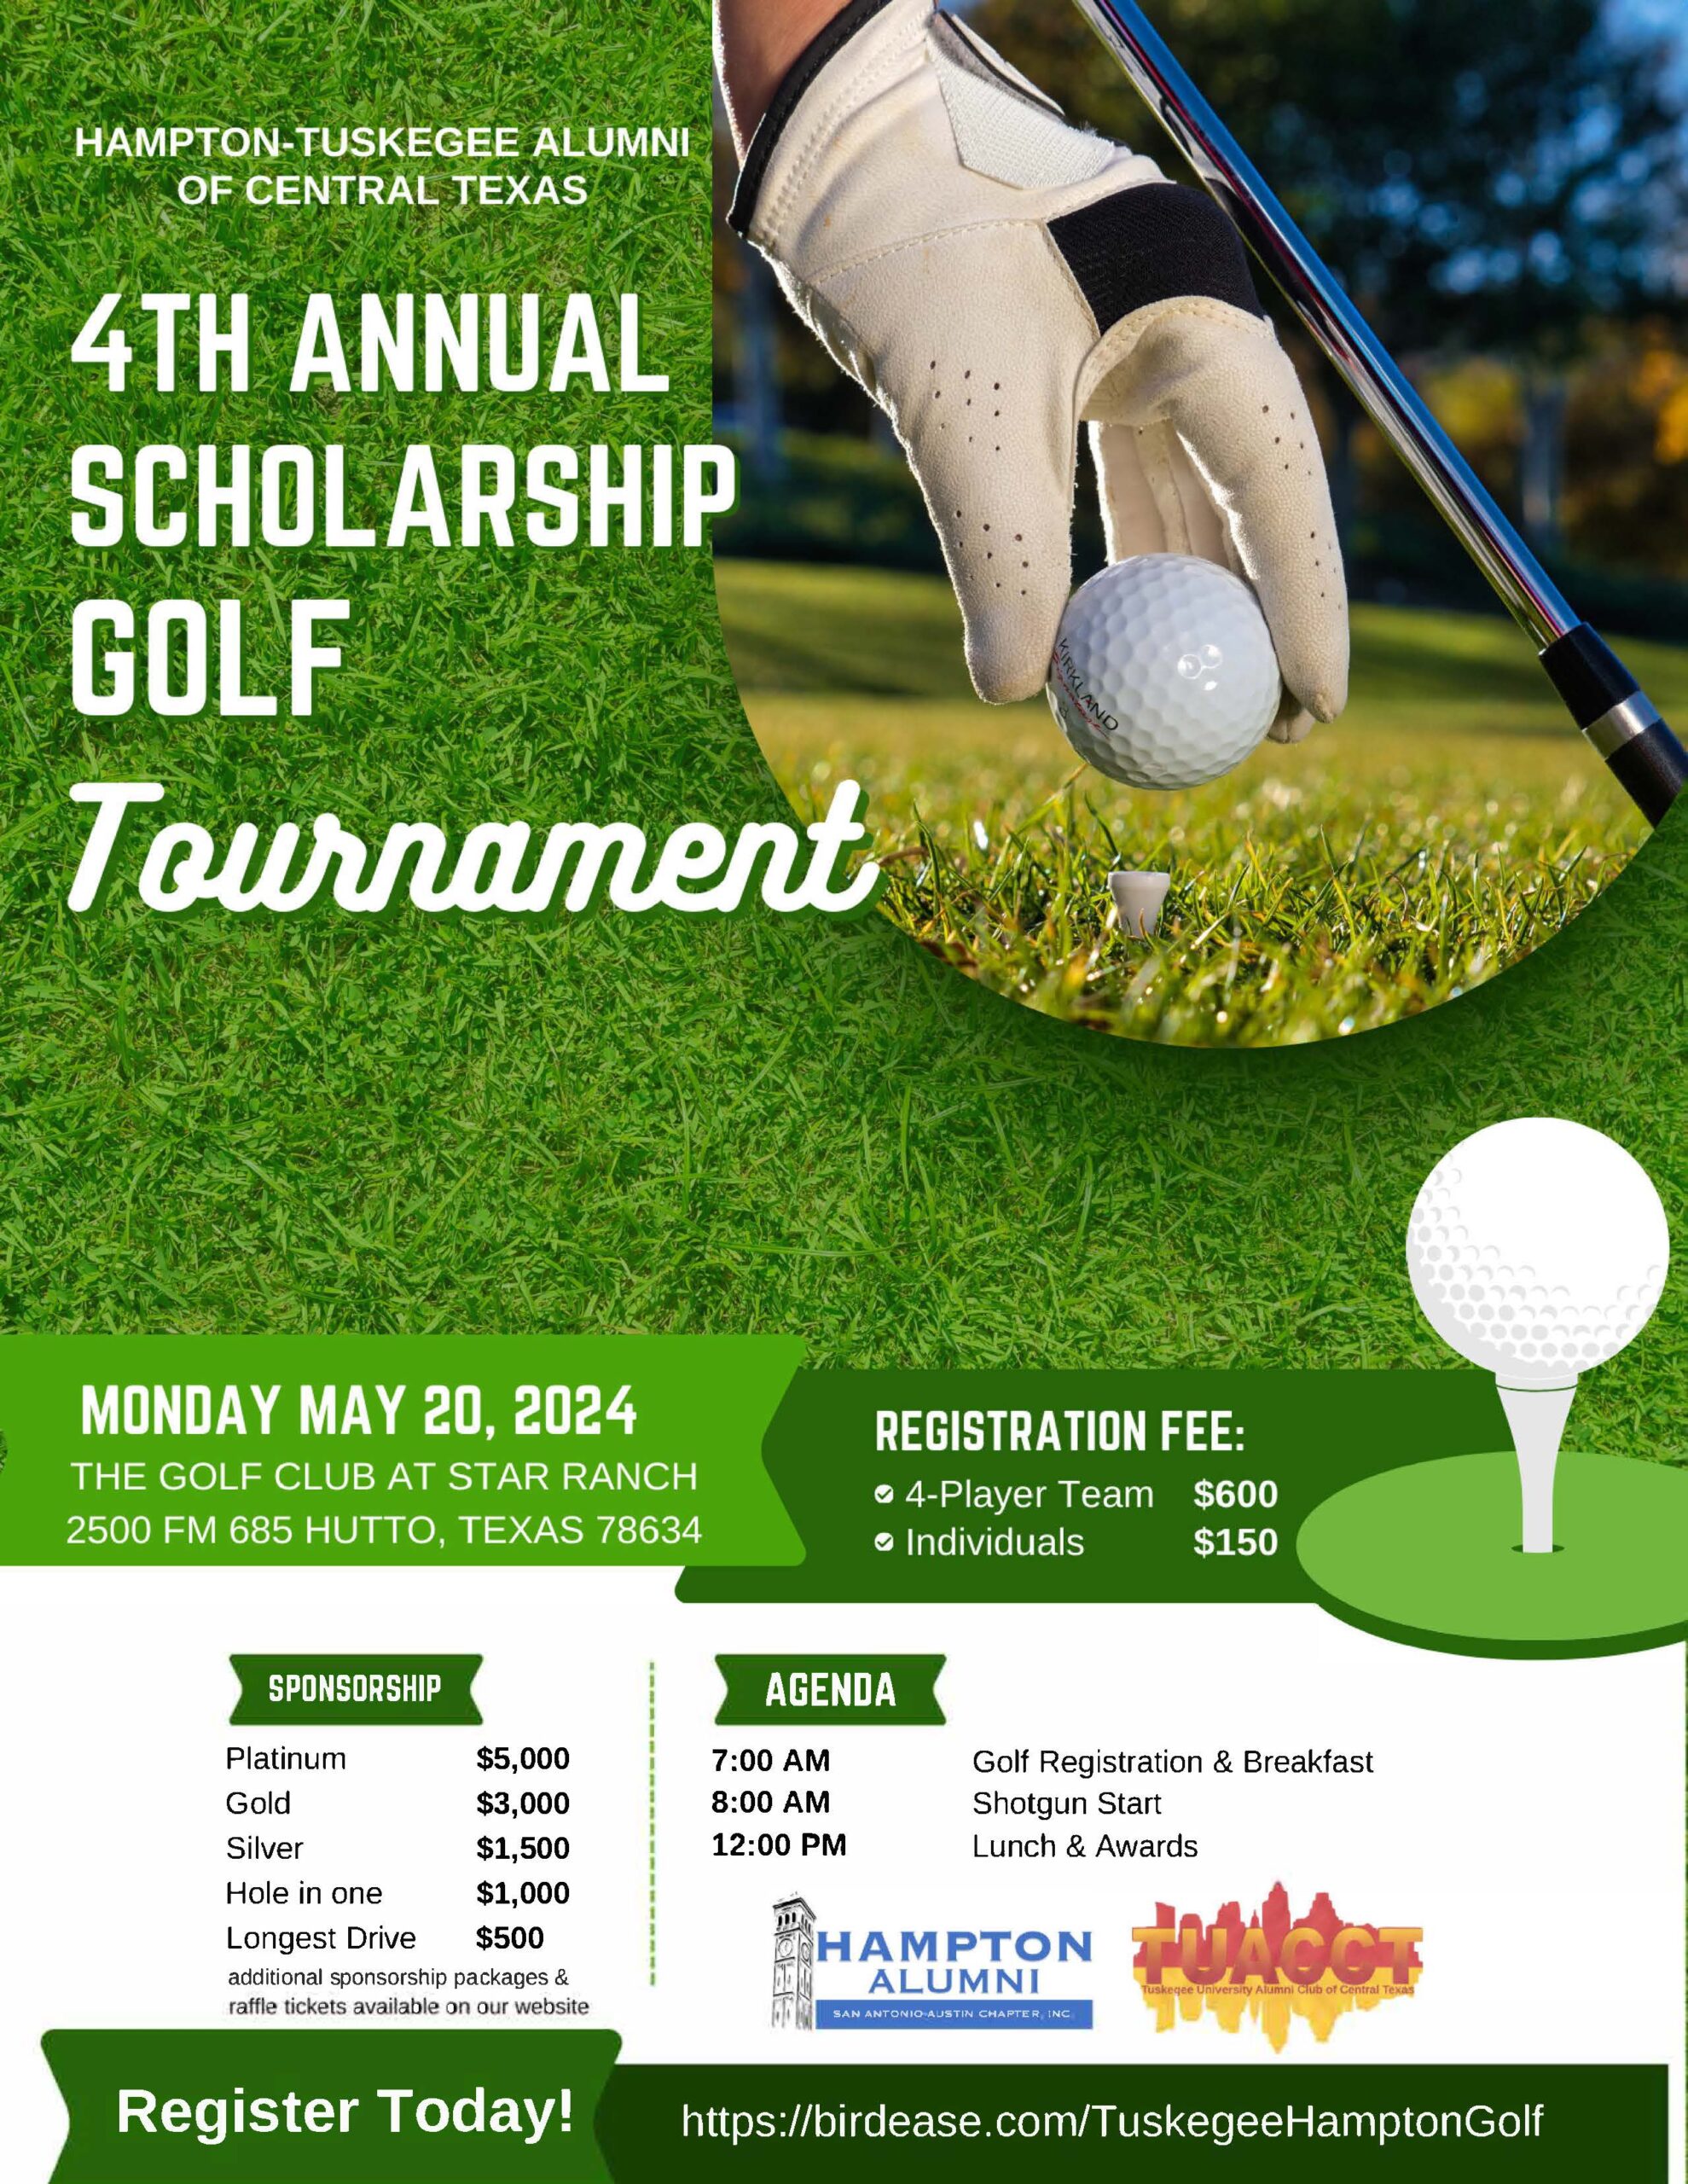 Hampton-Tuskegee-Alumni-of-CTX-4th-Annual-Scholarship-Golf-Tour-